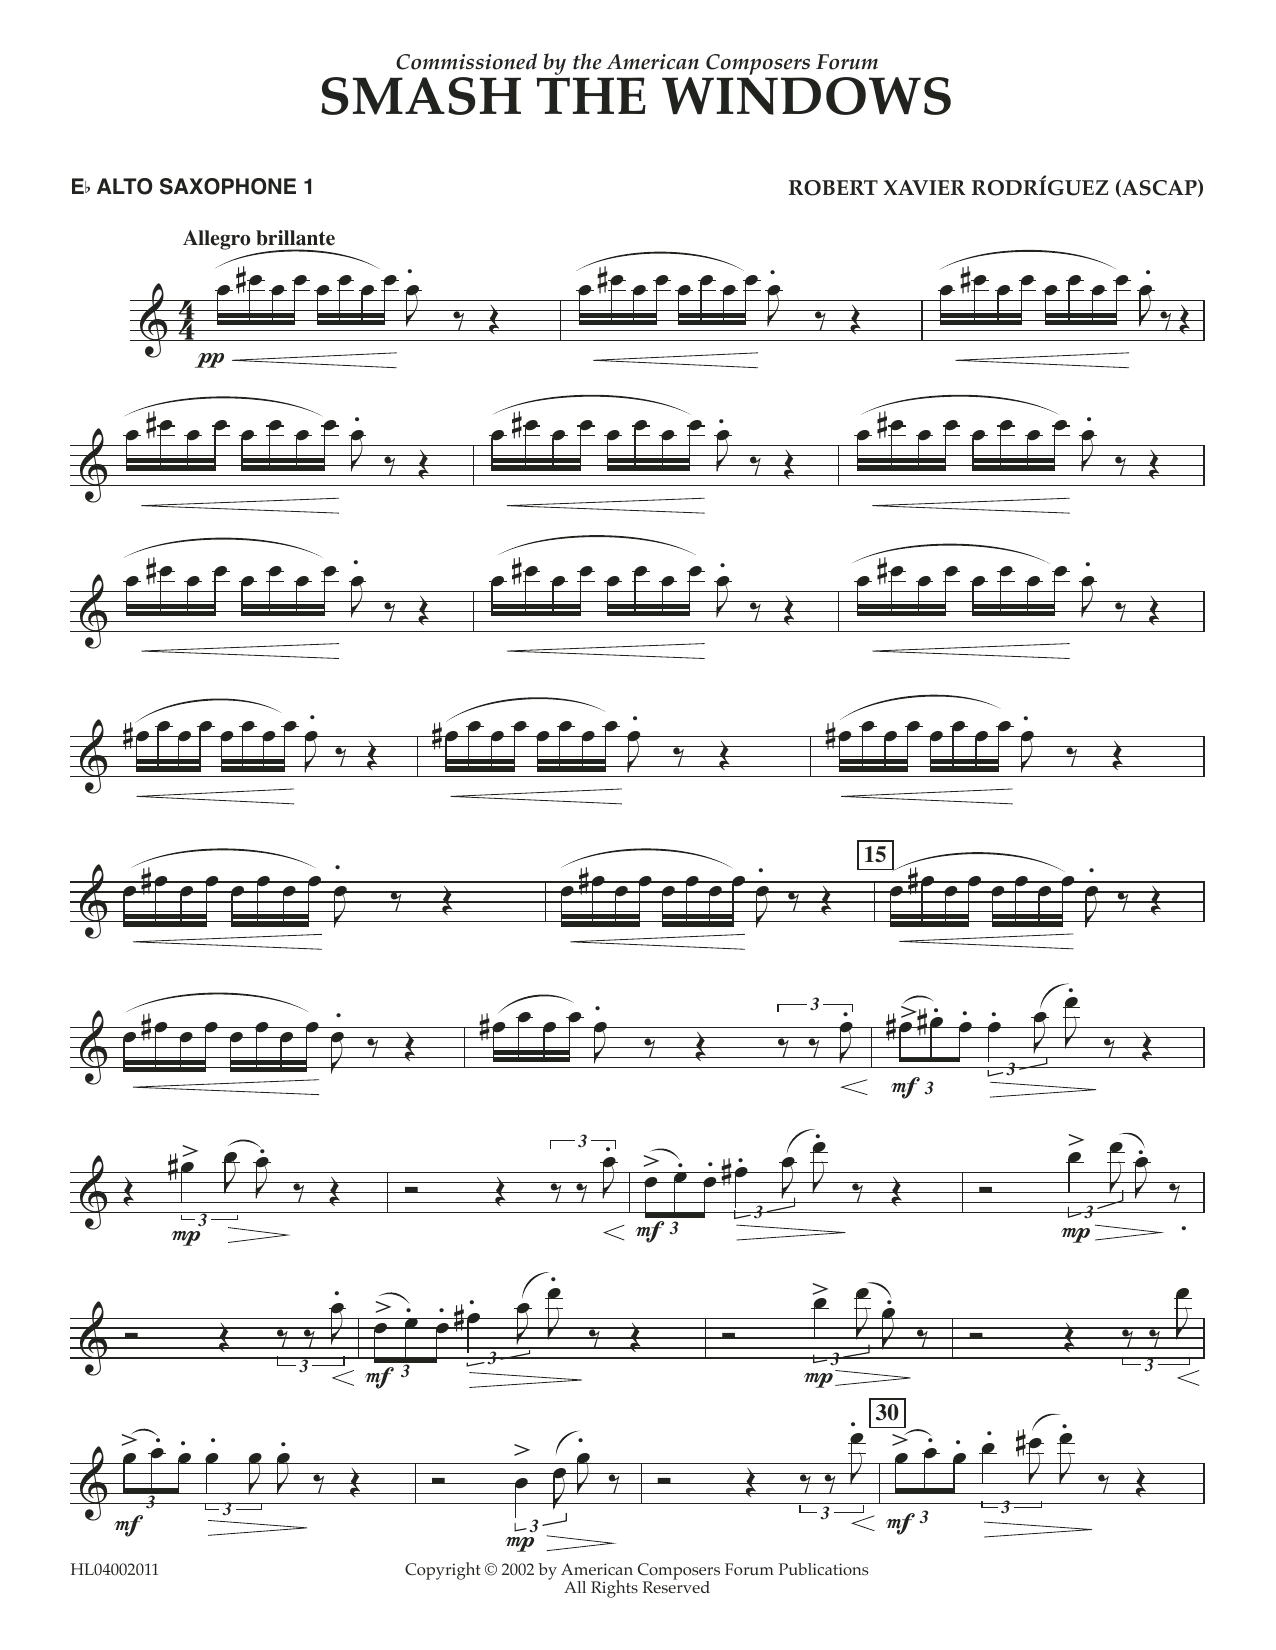 Robert Xavier Rodríguez Smash the Windows - Eb Alto Sax 1 Sheet Music Notes & Chords for Concert Band - Download or Print PDF